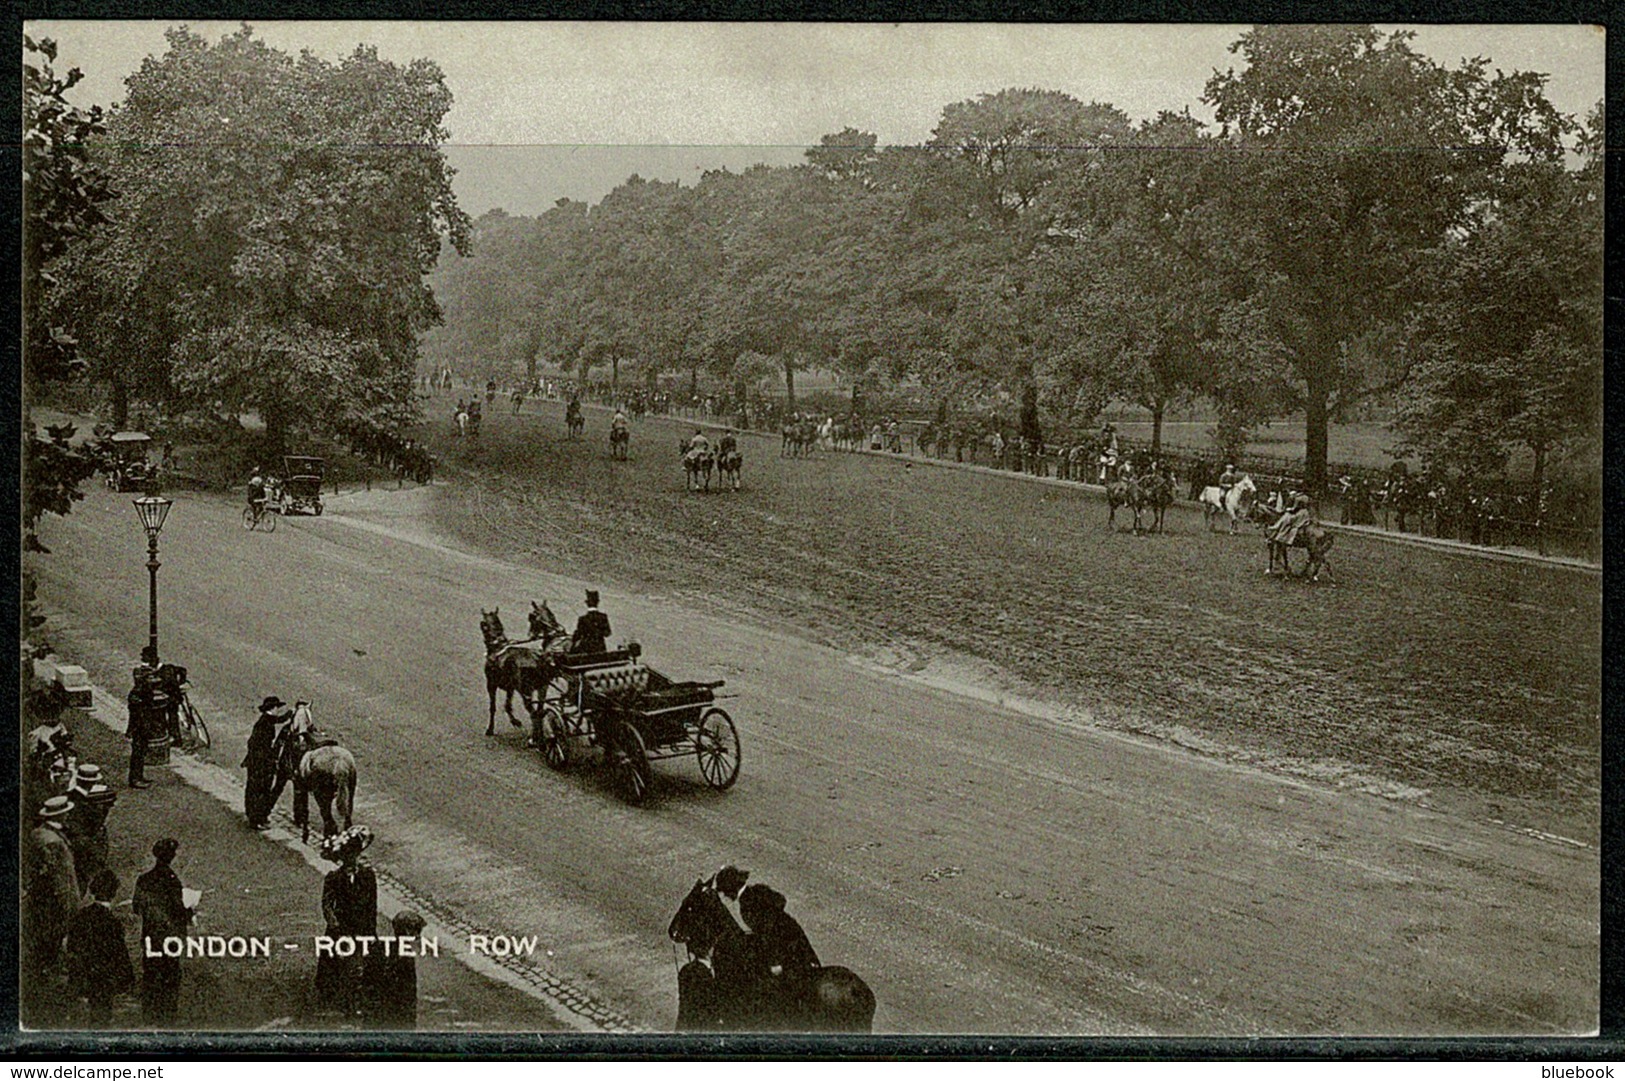 Ref 1297 - 2 X Early Postcards - Buckingham Palace & Rotten Row London - Buckingham Palace